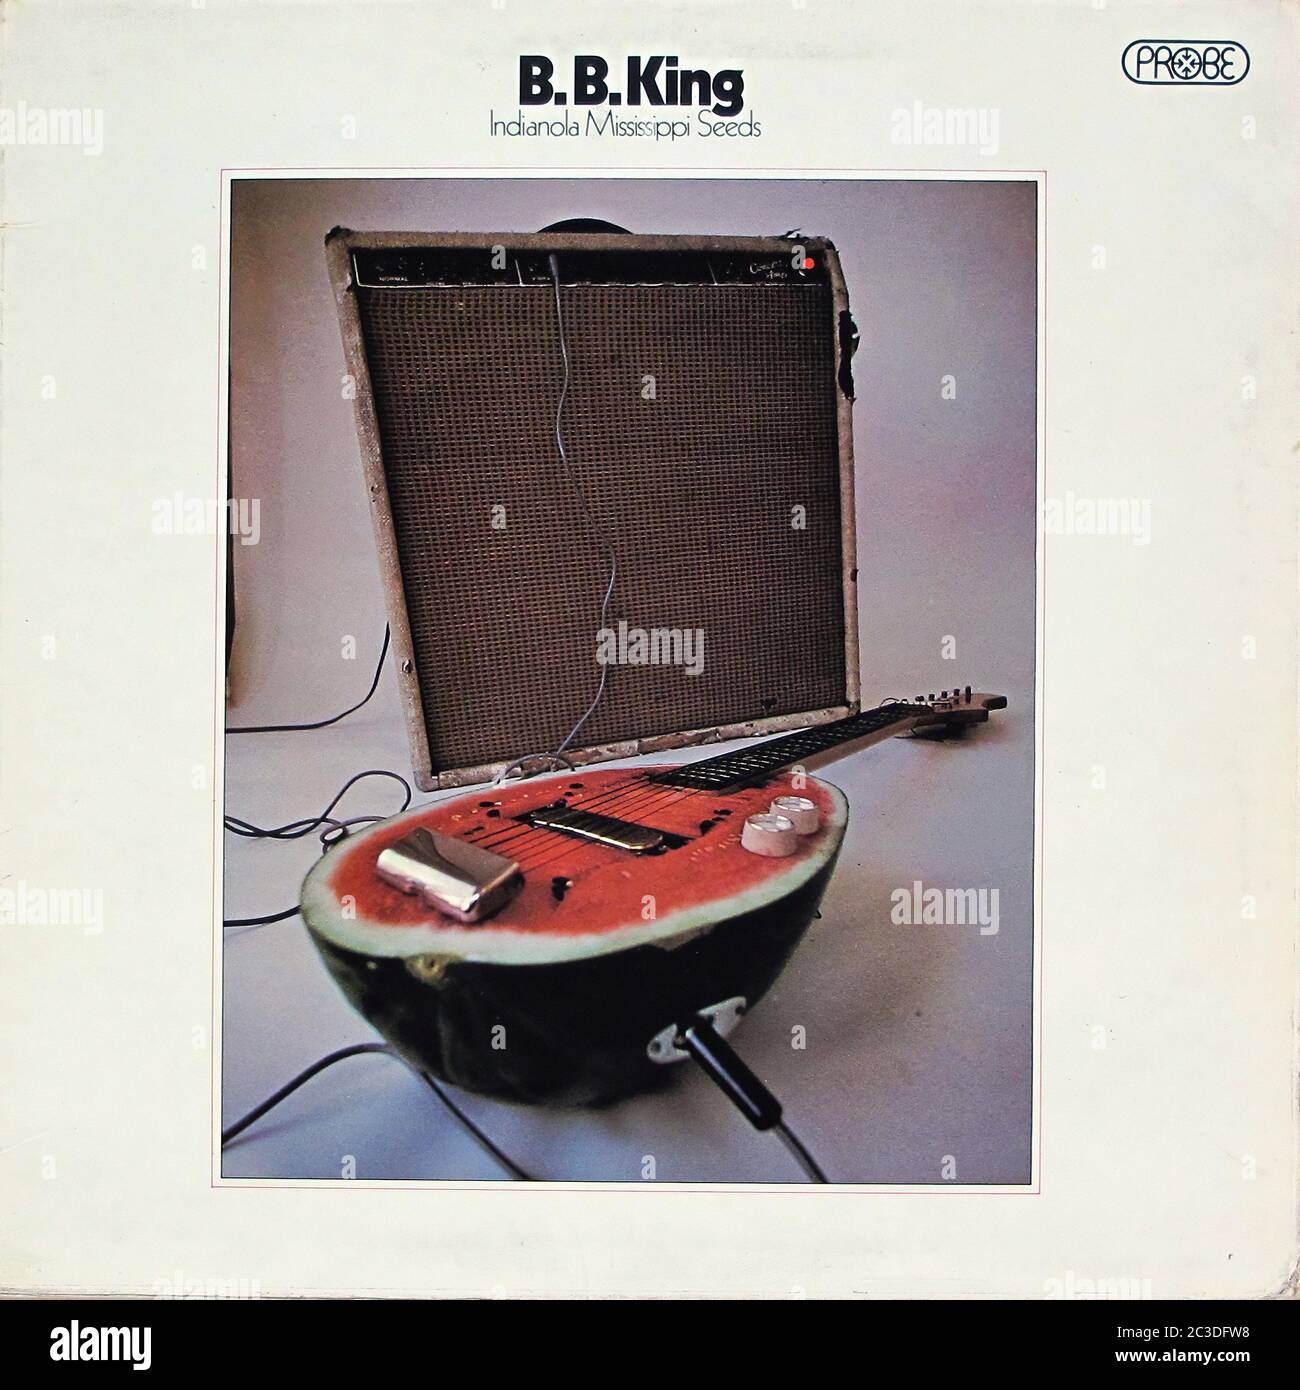 B.B. KING INDIANOLA MISSISSIPPI SEEDS    - Vintage 12'' LP vinyl Cover Stock Photo